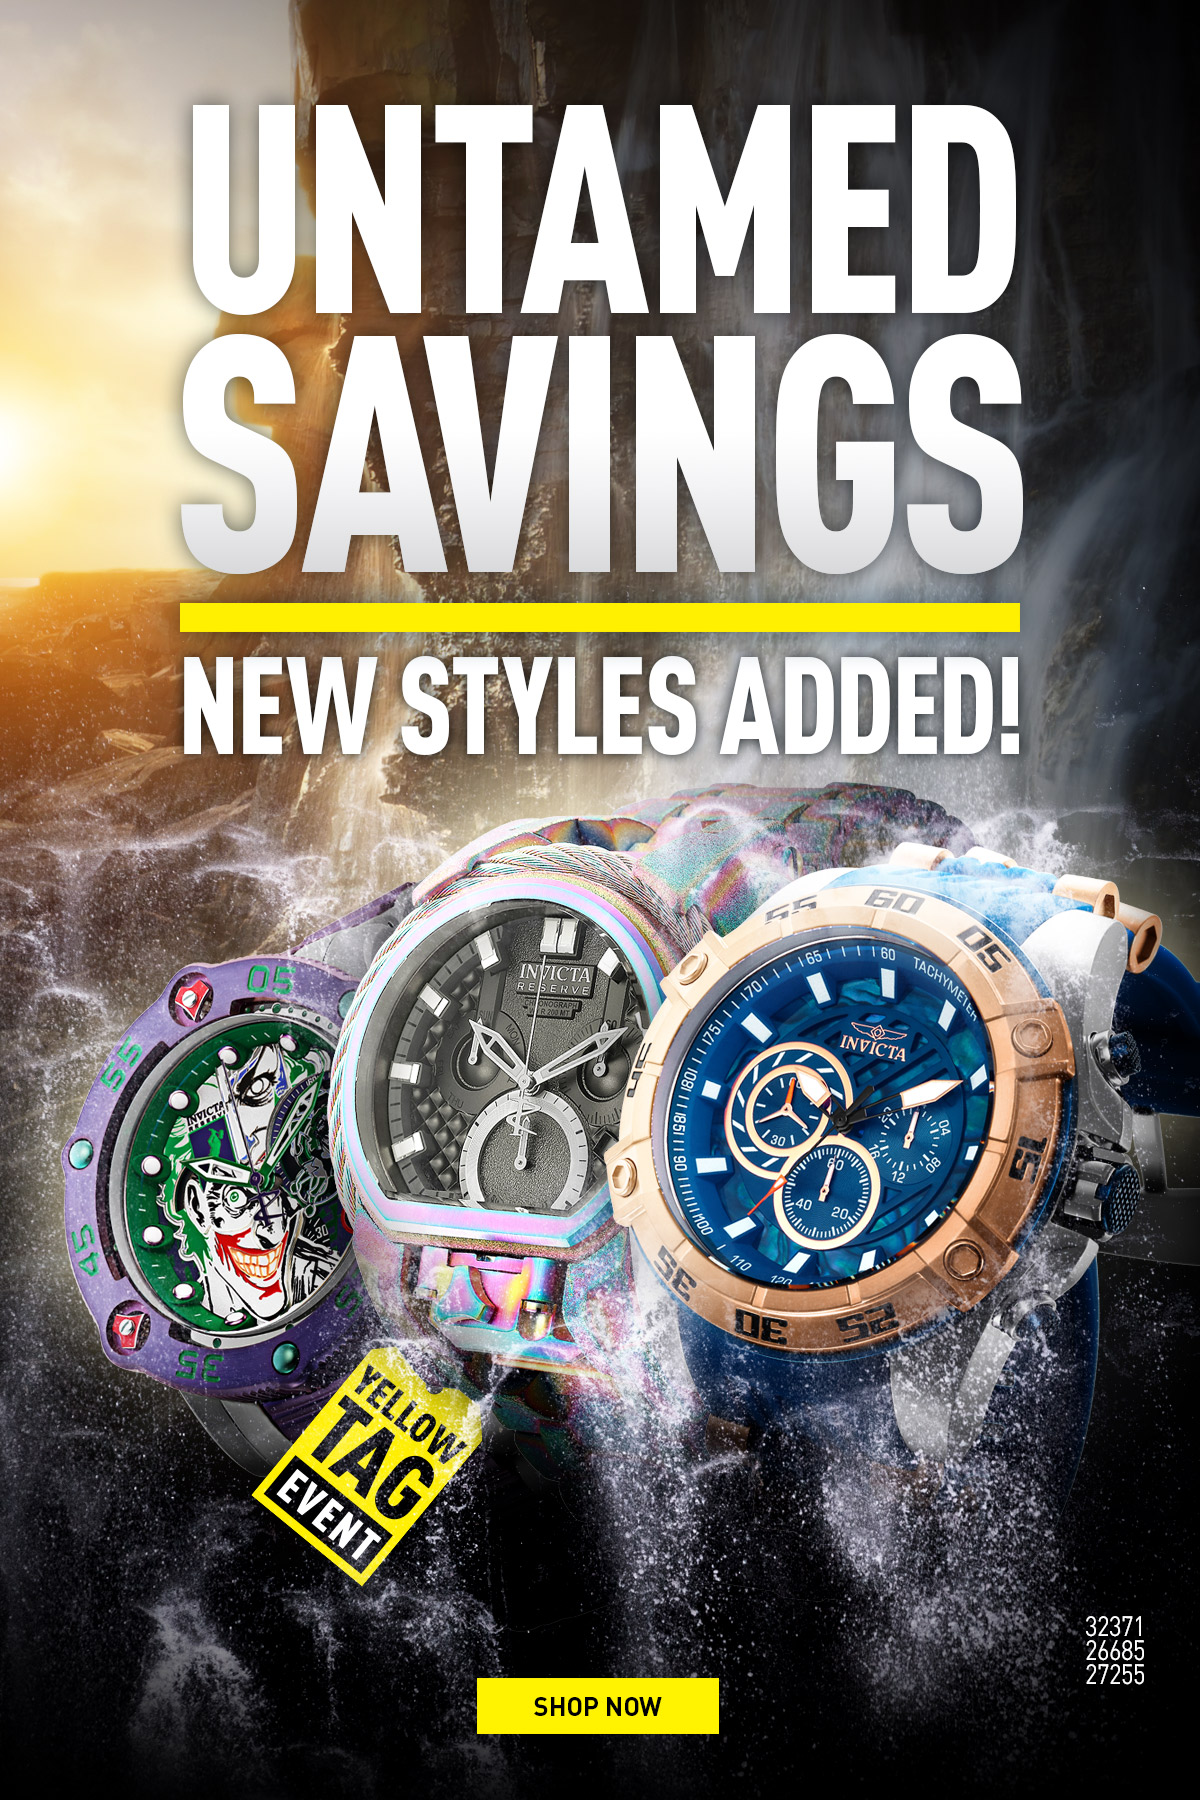 Untamed Savings! New Styles added!